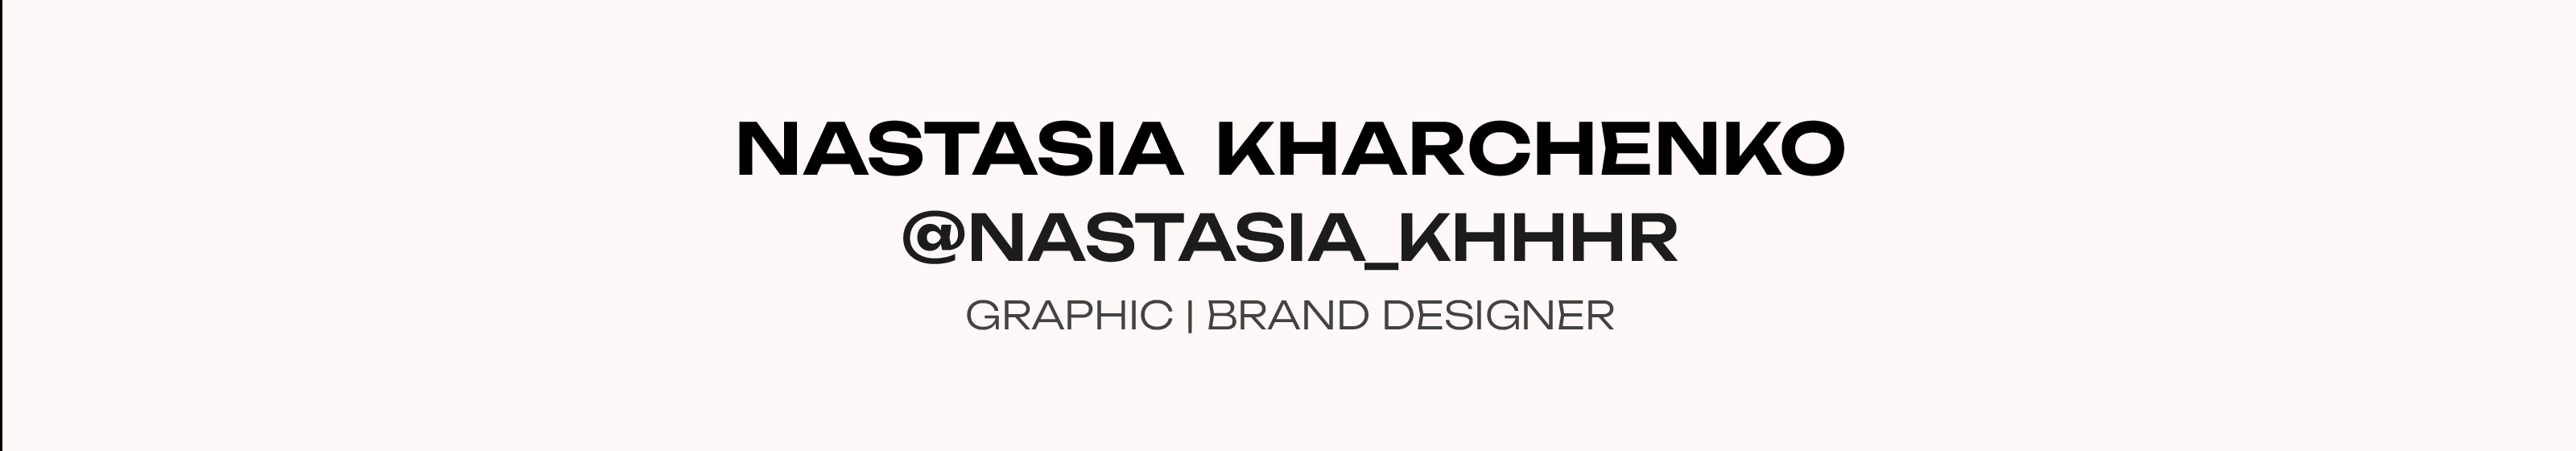 Nastasia Kharchenko's profile banner